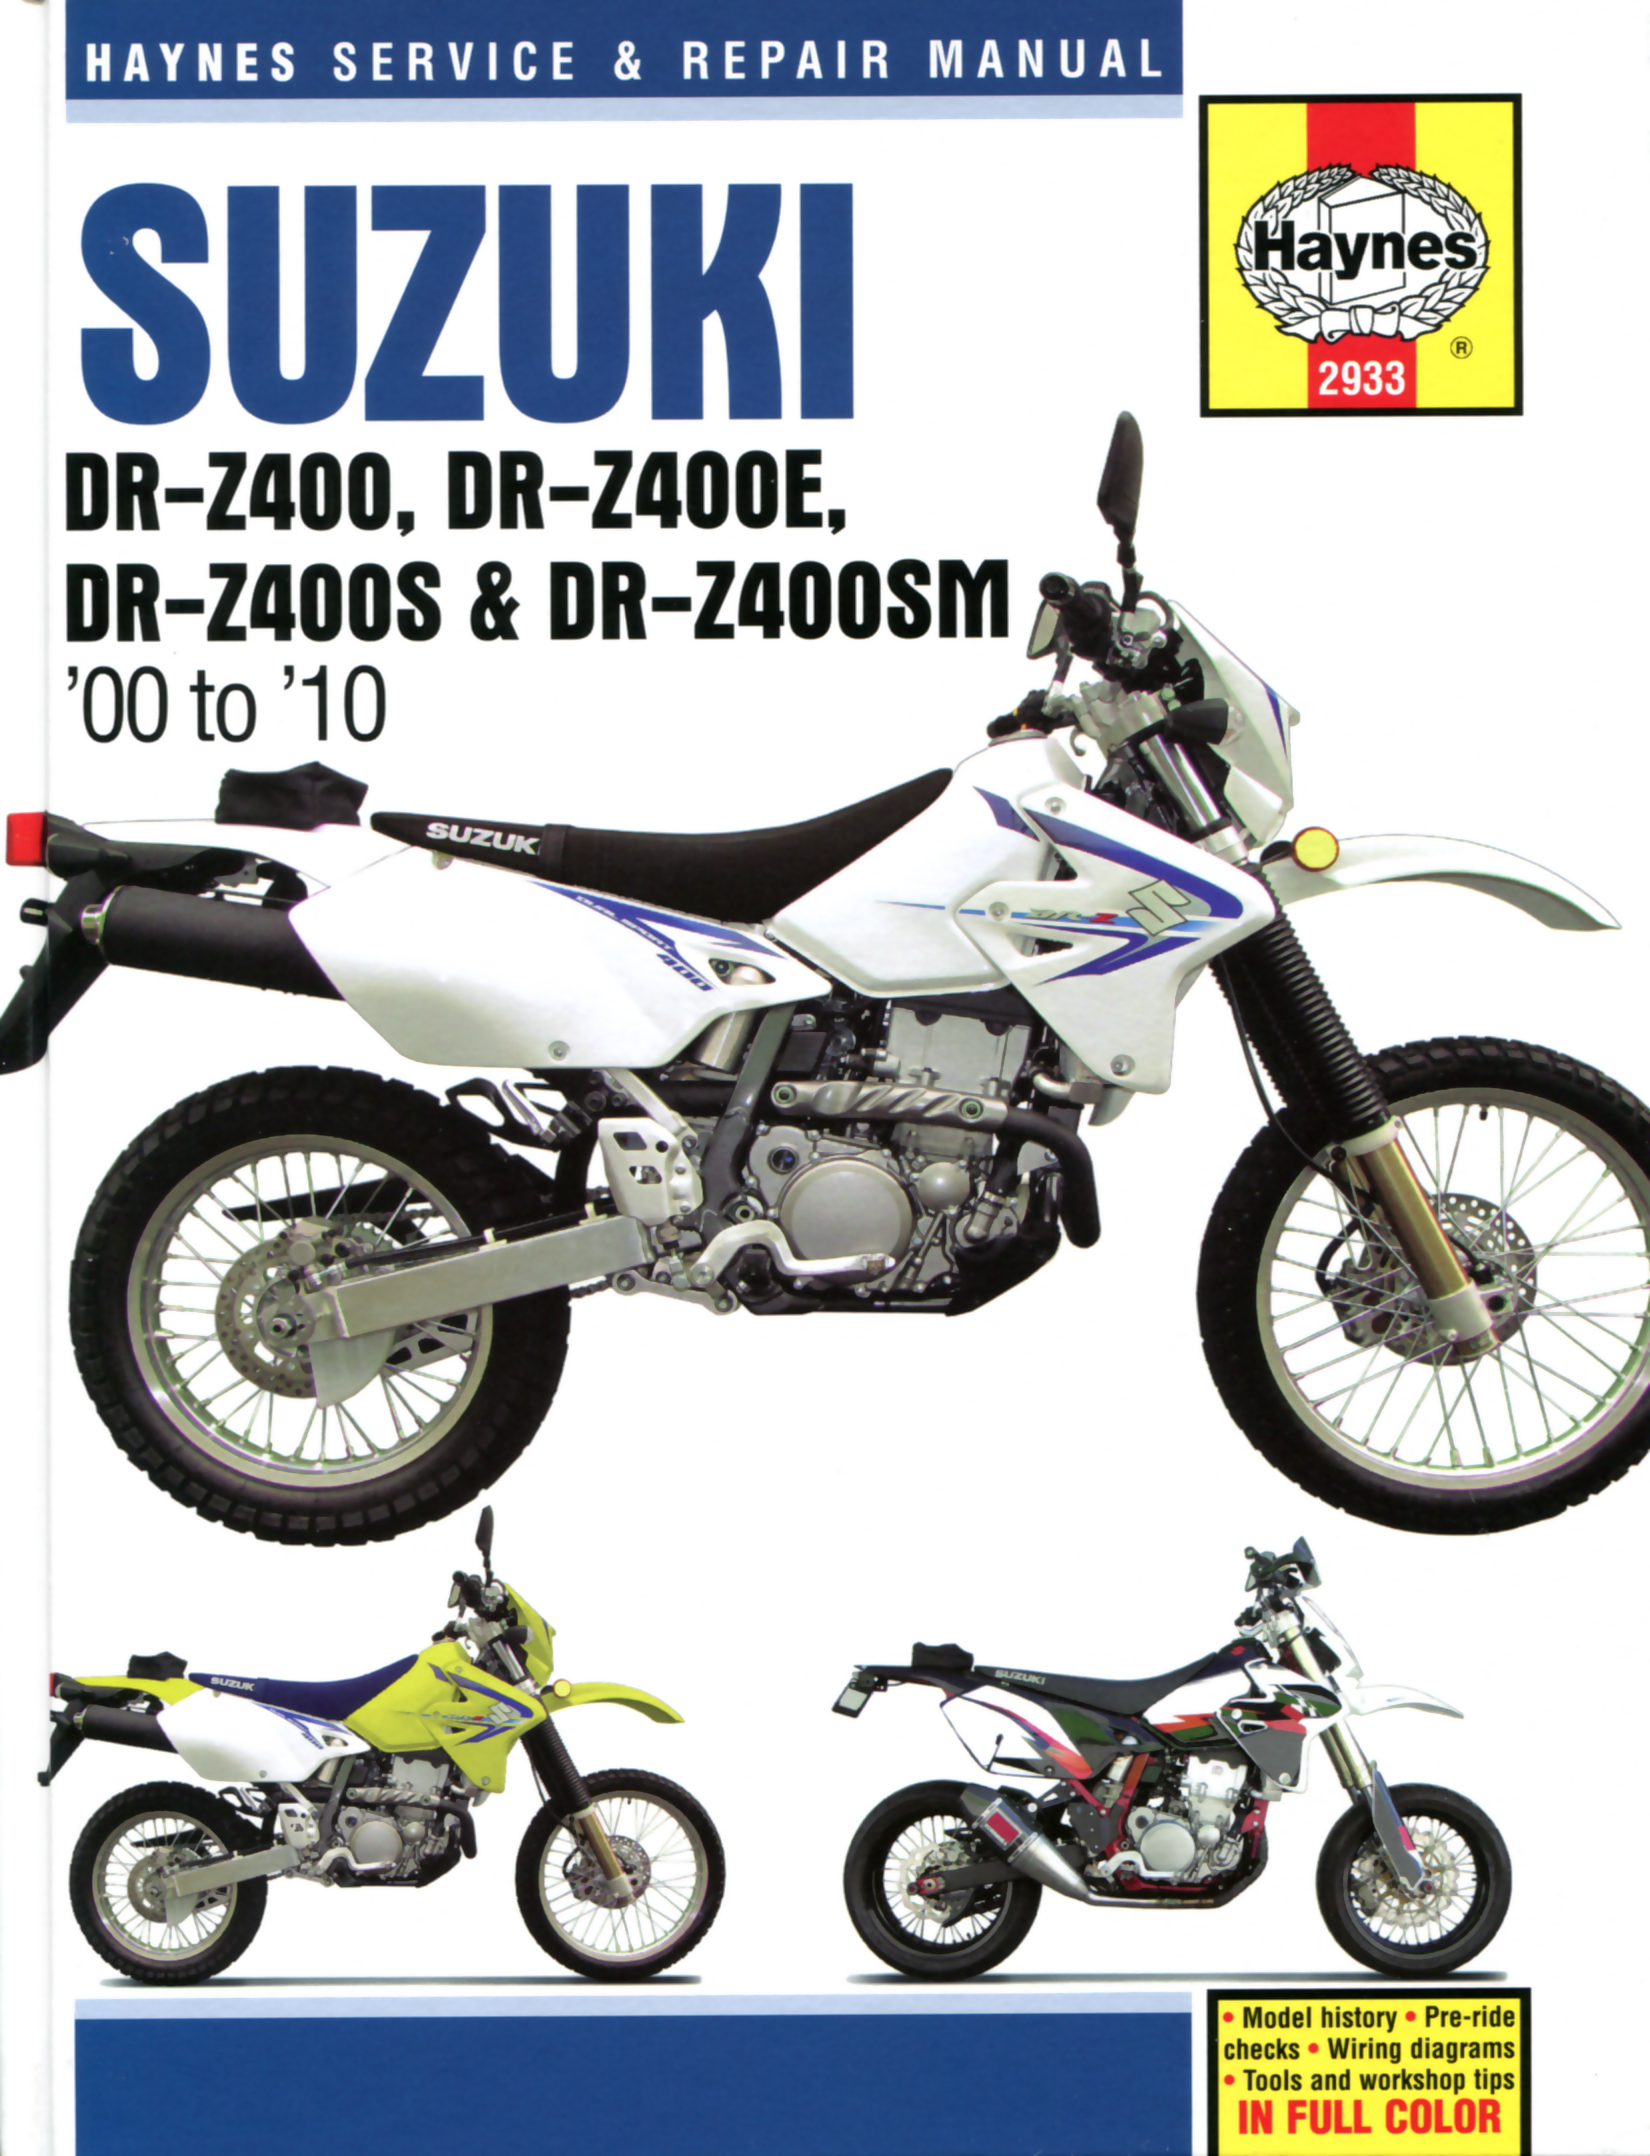 Suzuki DR-Z400 DR-Z400E DR-Z400S DR-Z400SM 2000-10 Haynes Workshop Manual 2933 